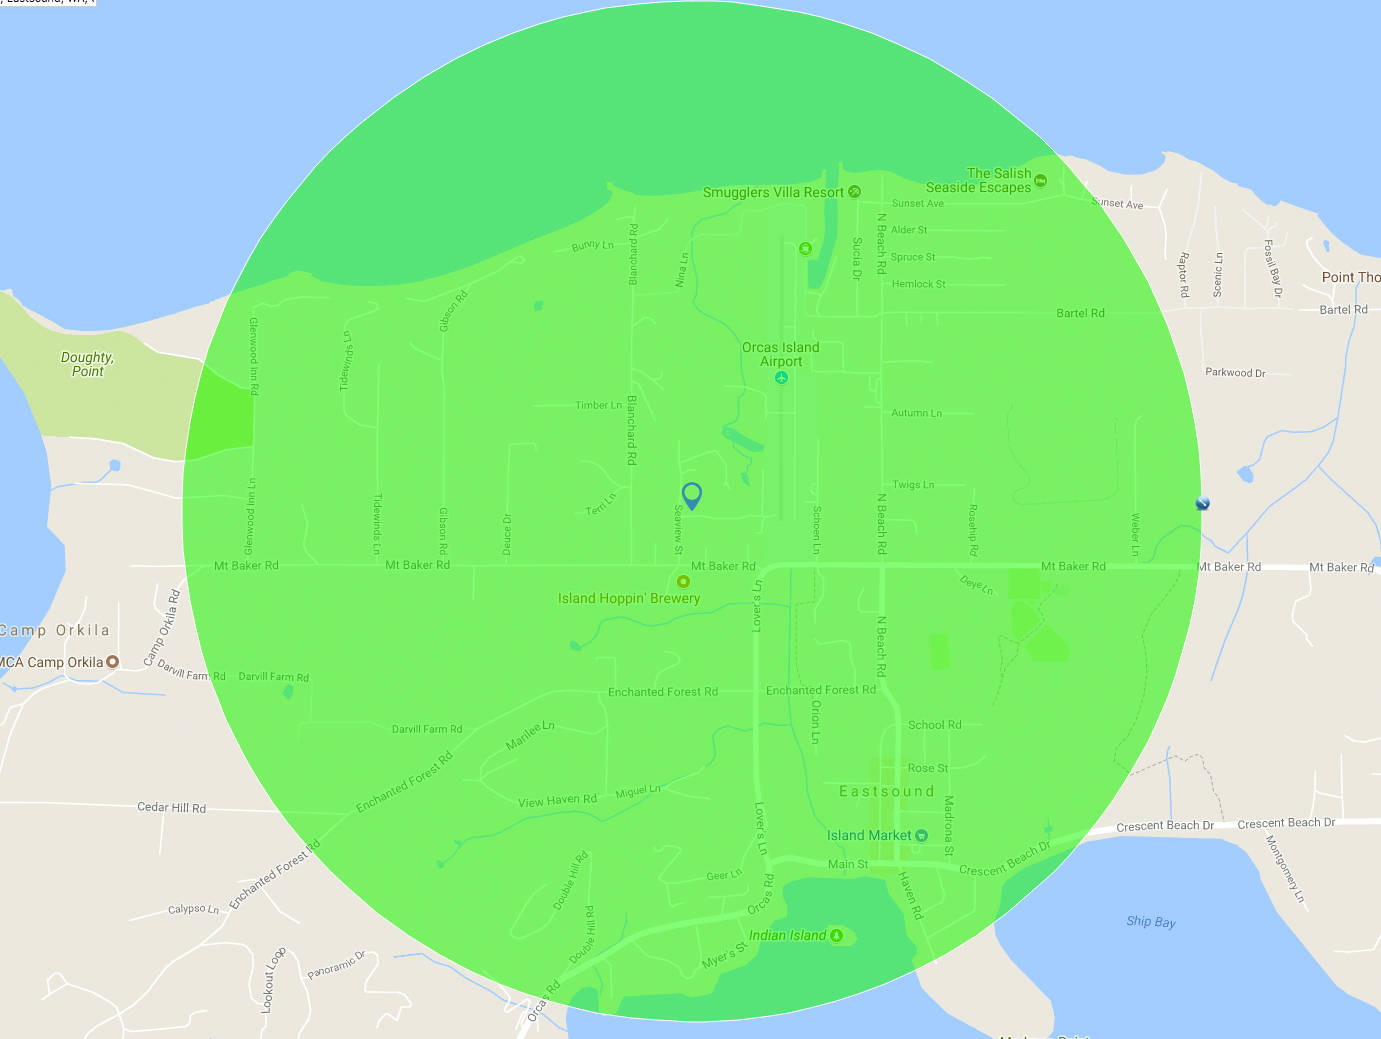 One-mile evacuation radius